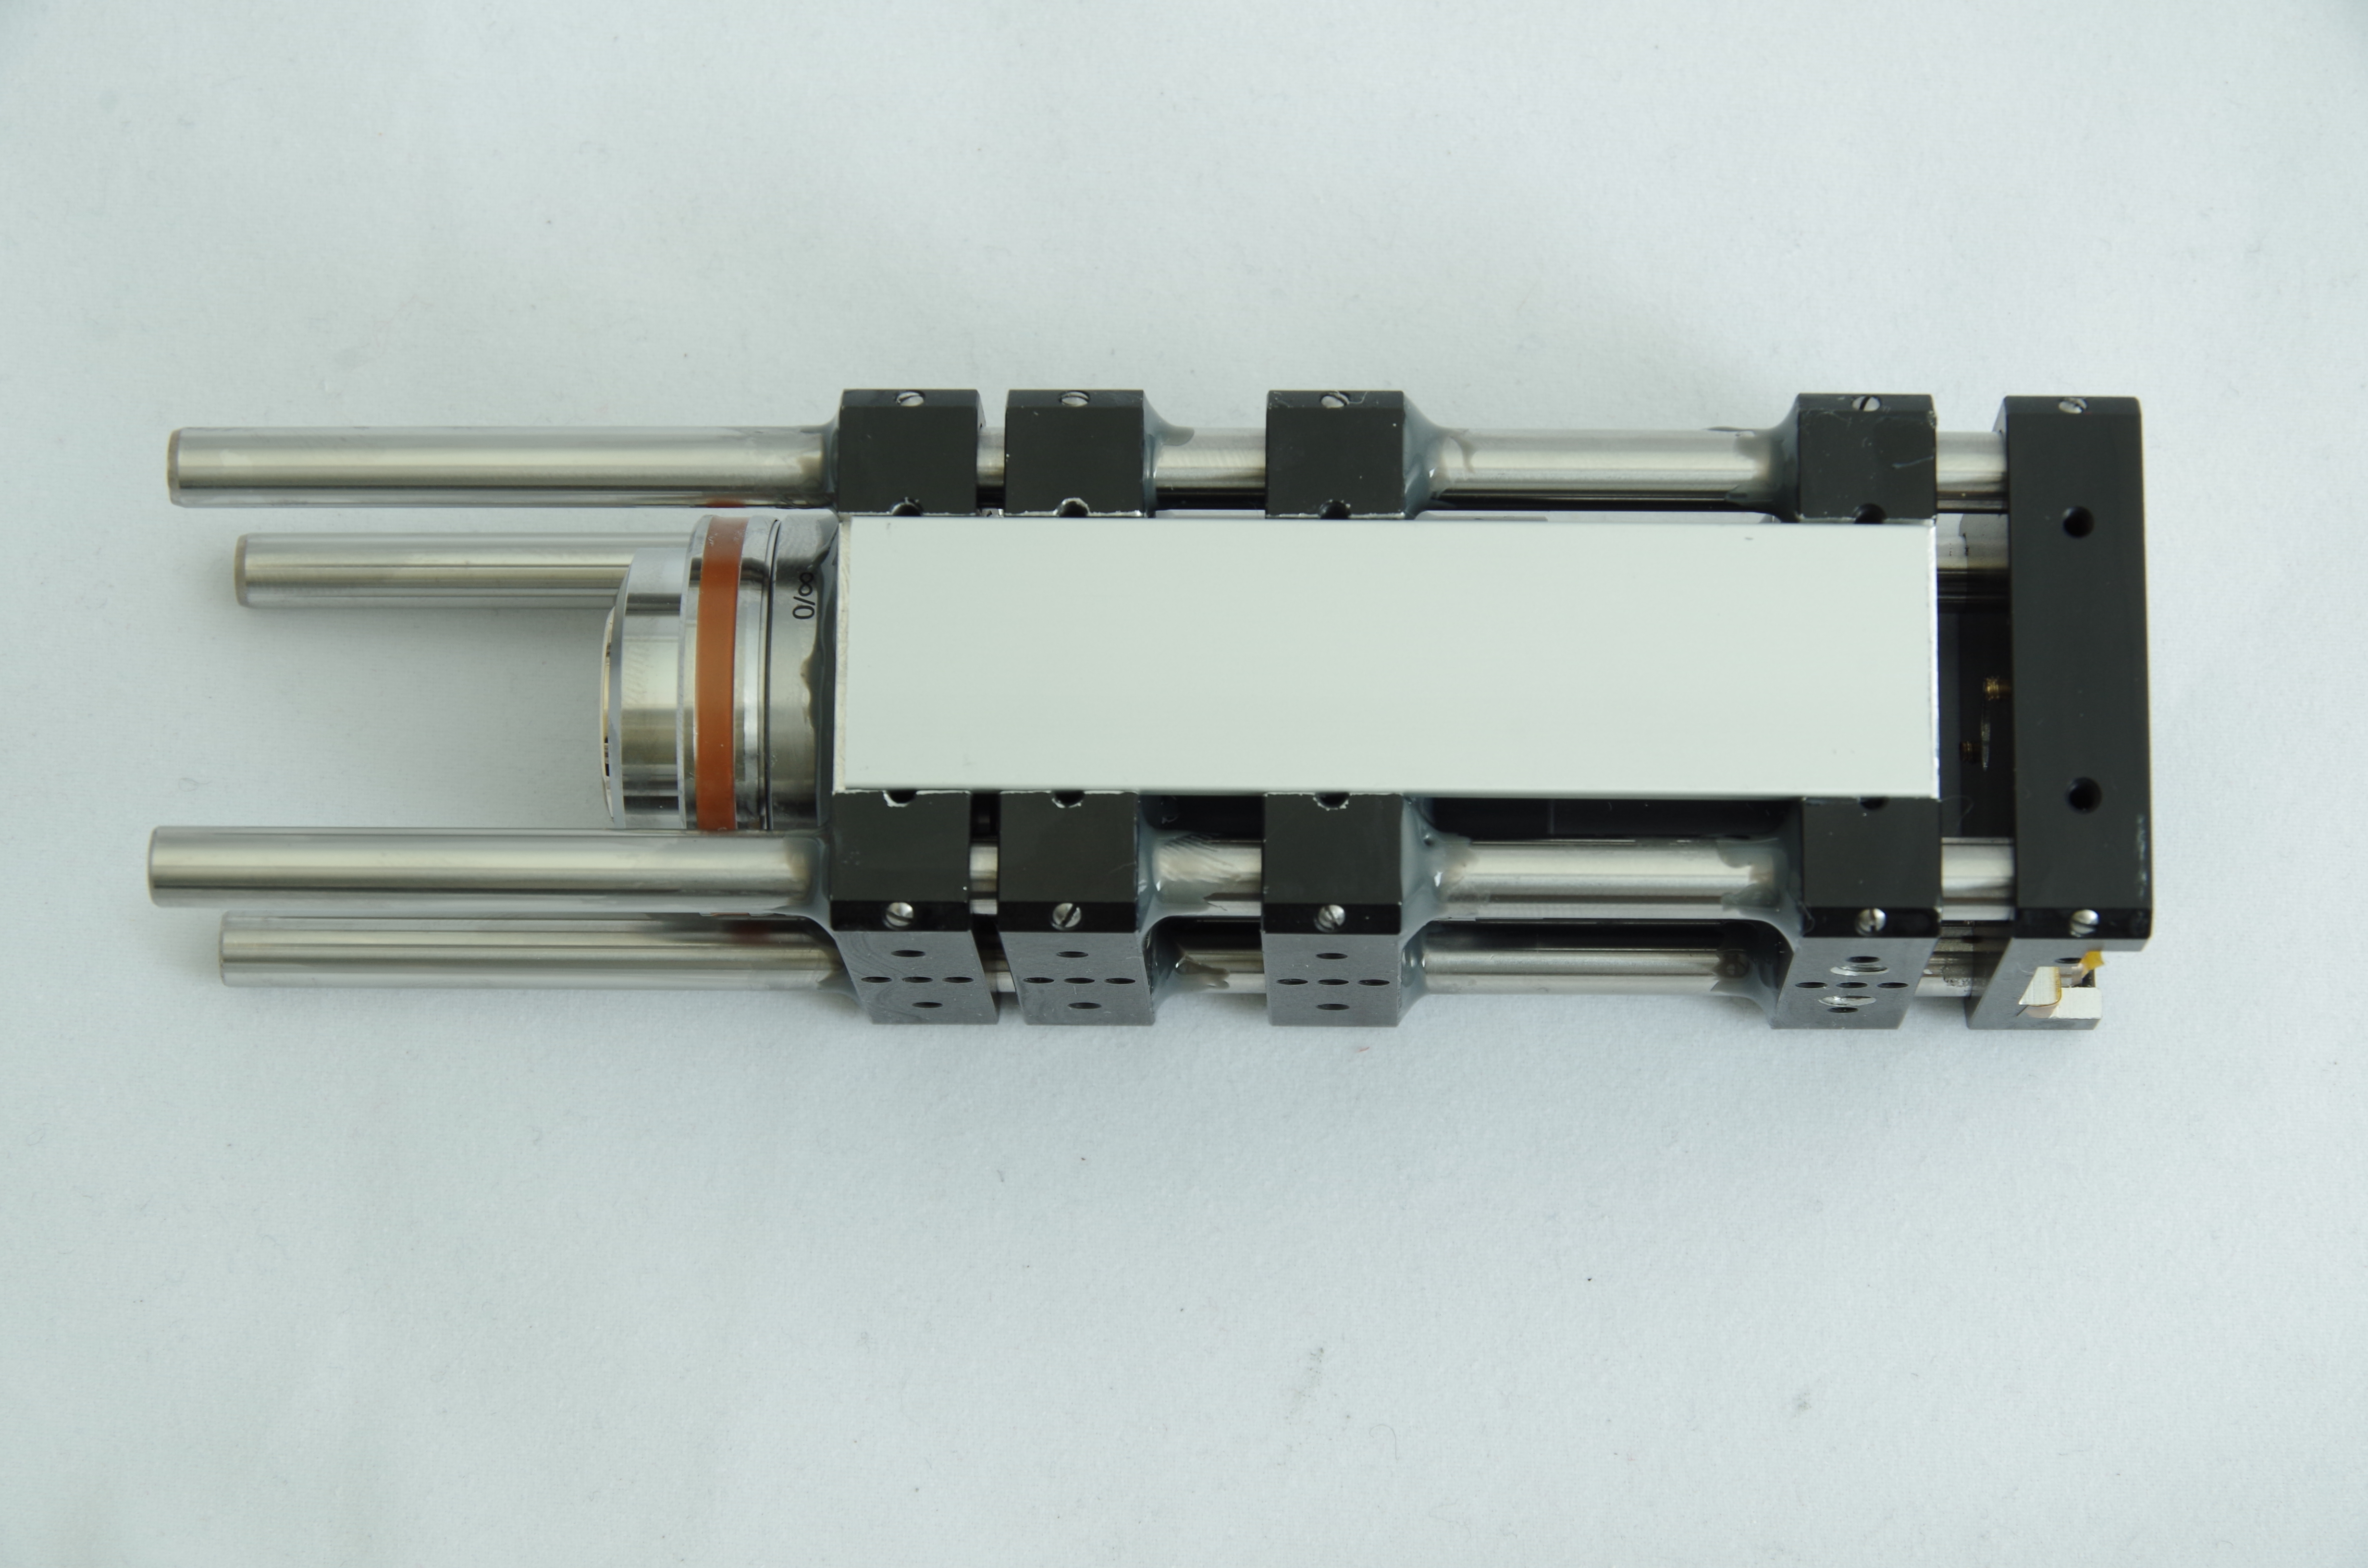 Science Experimental Unit - optics, objective, tube lense and camera sensor, glued to holder, with aluminum sheet